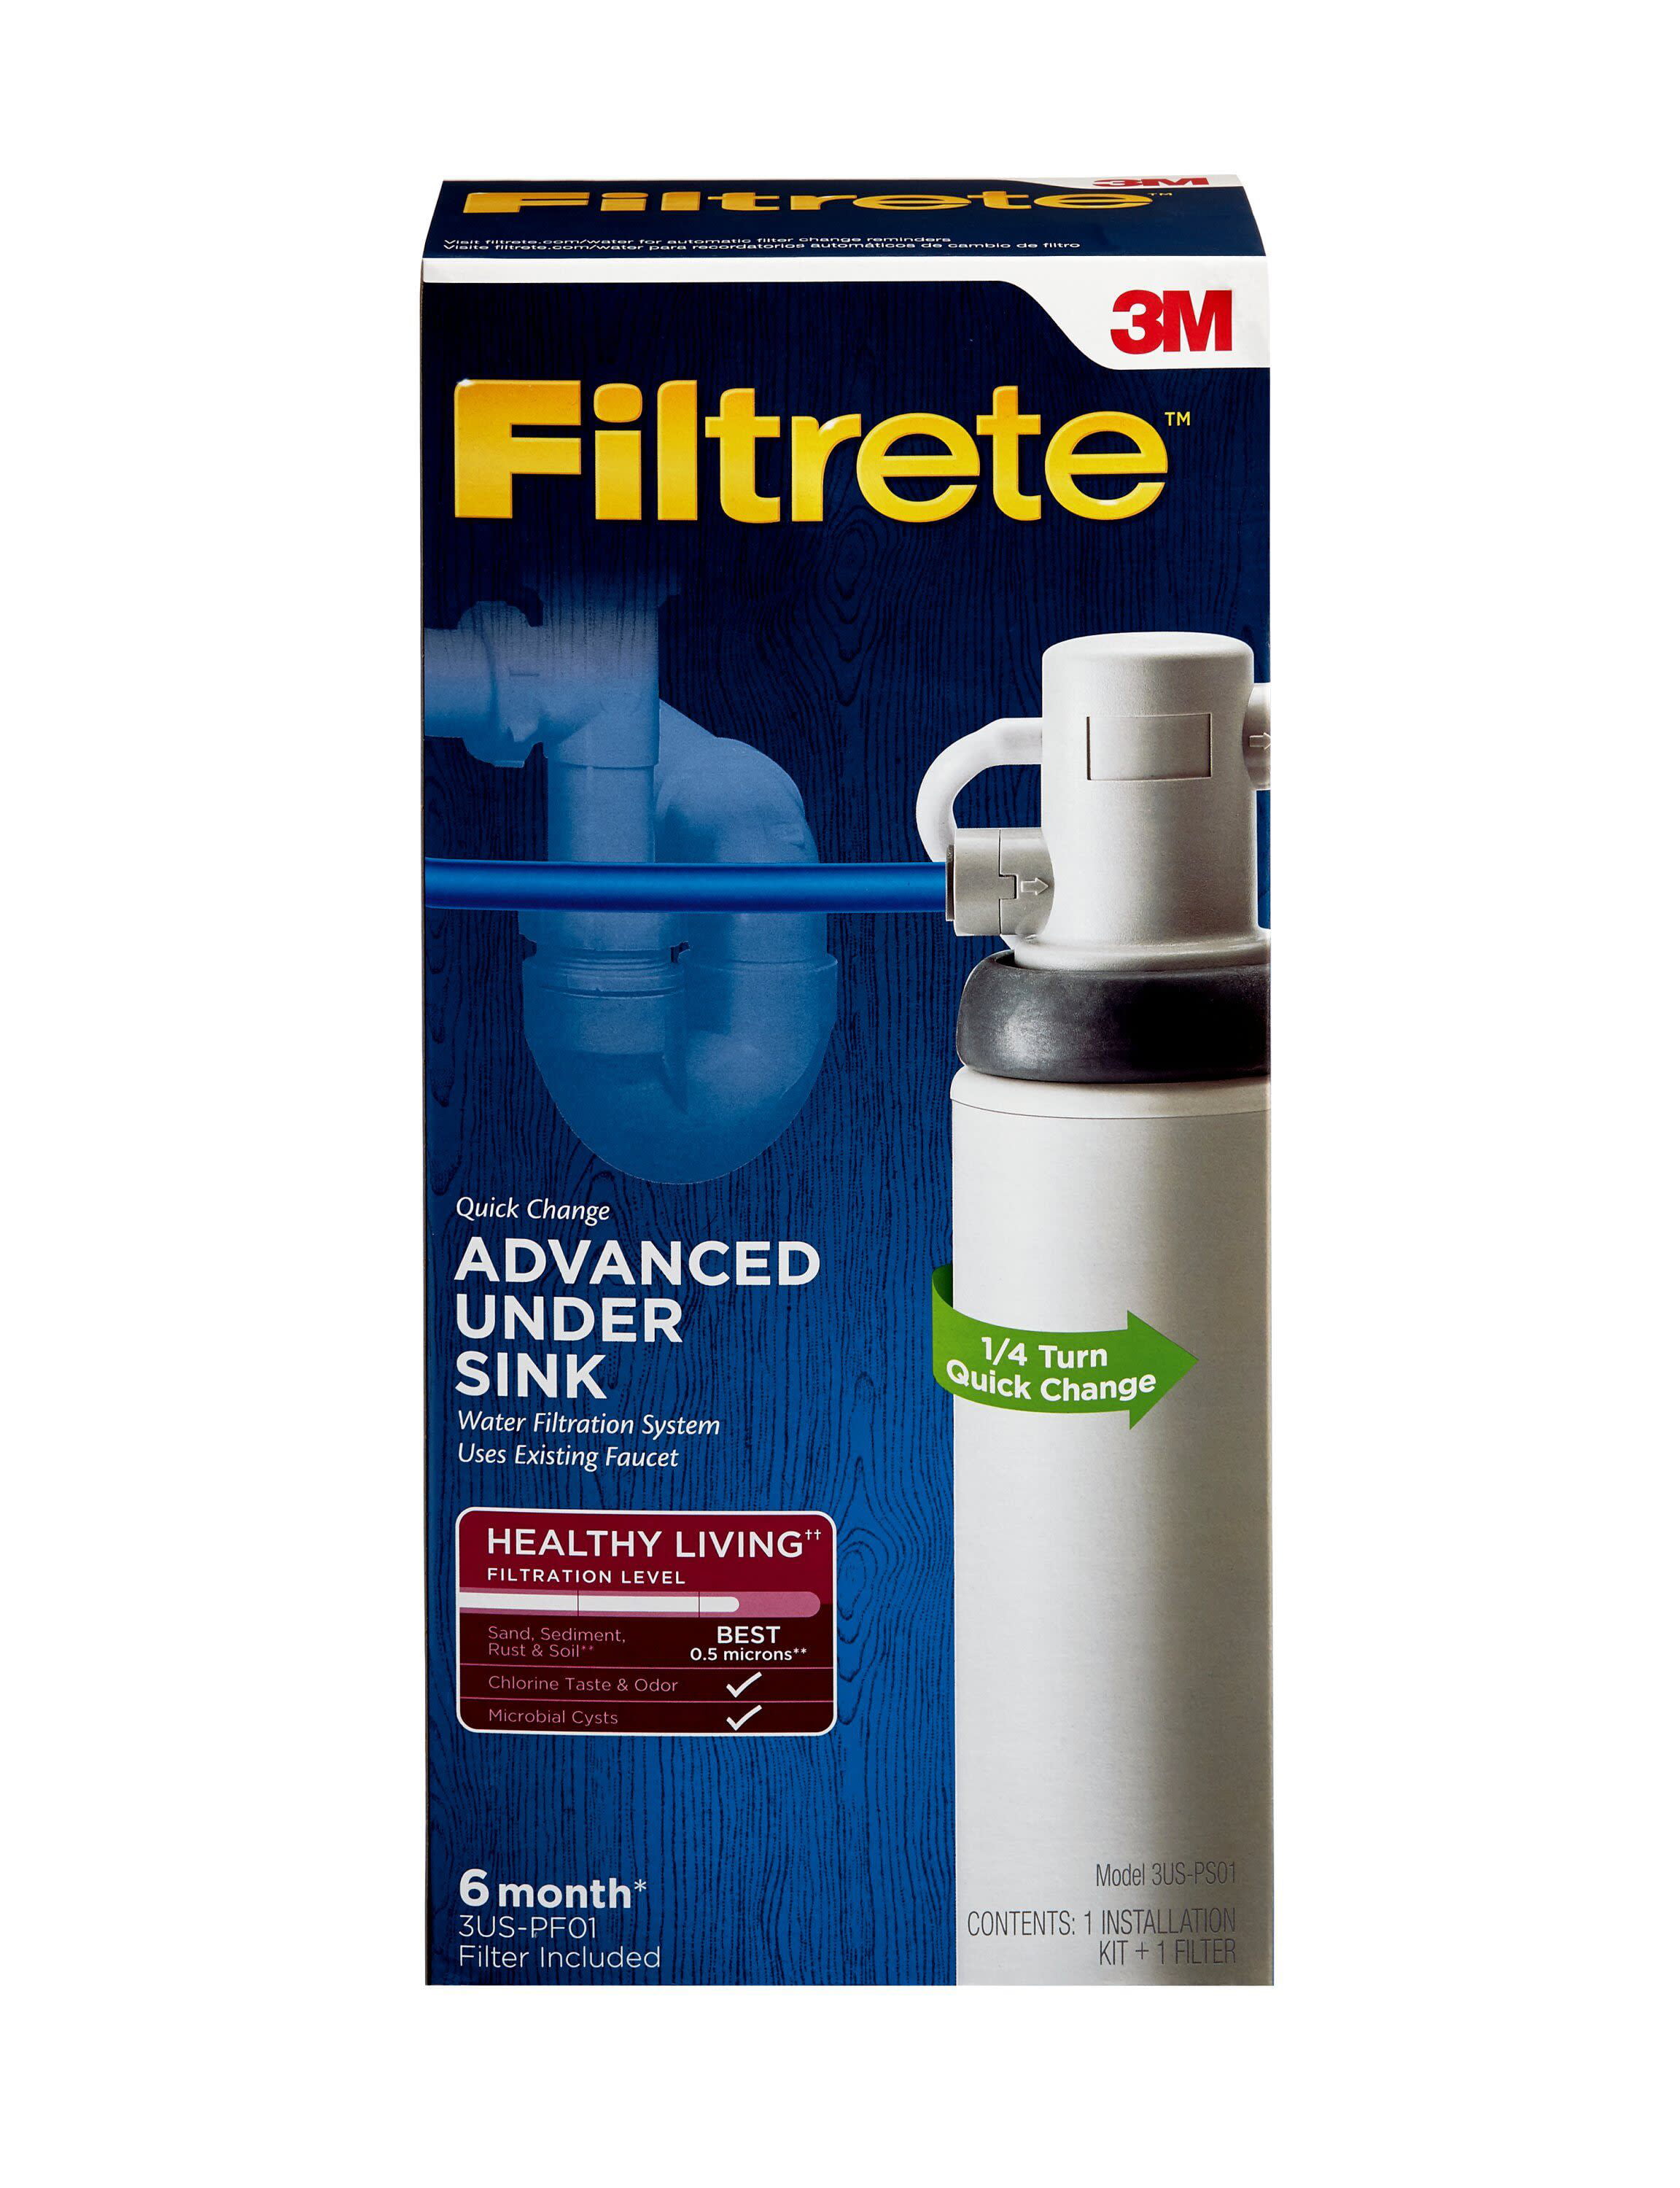 filtrete-advanced-under-sink-quick-change-water-filtration-system-easy